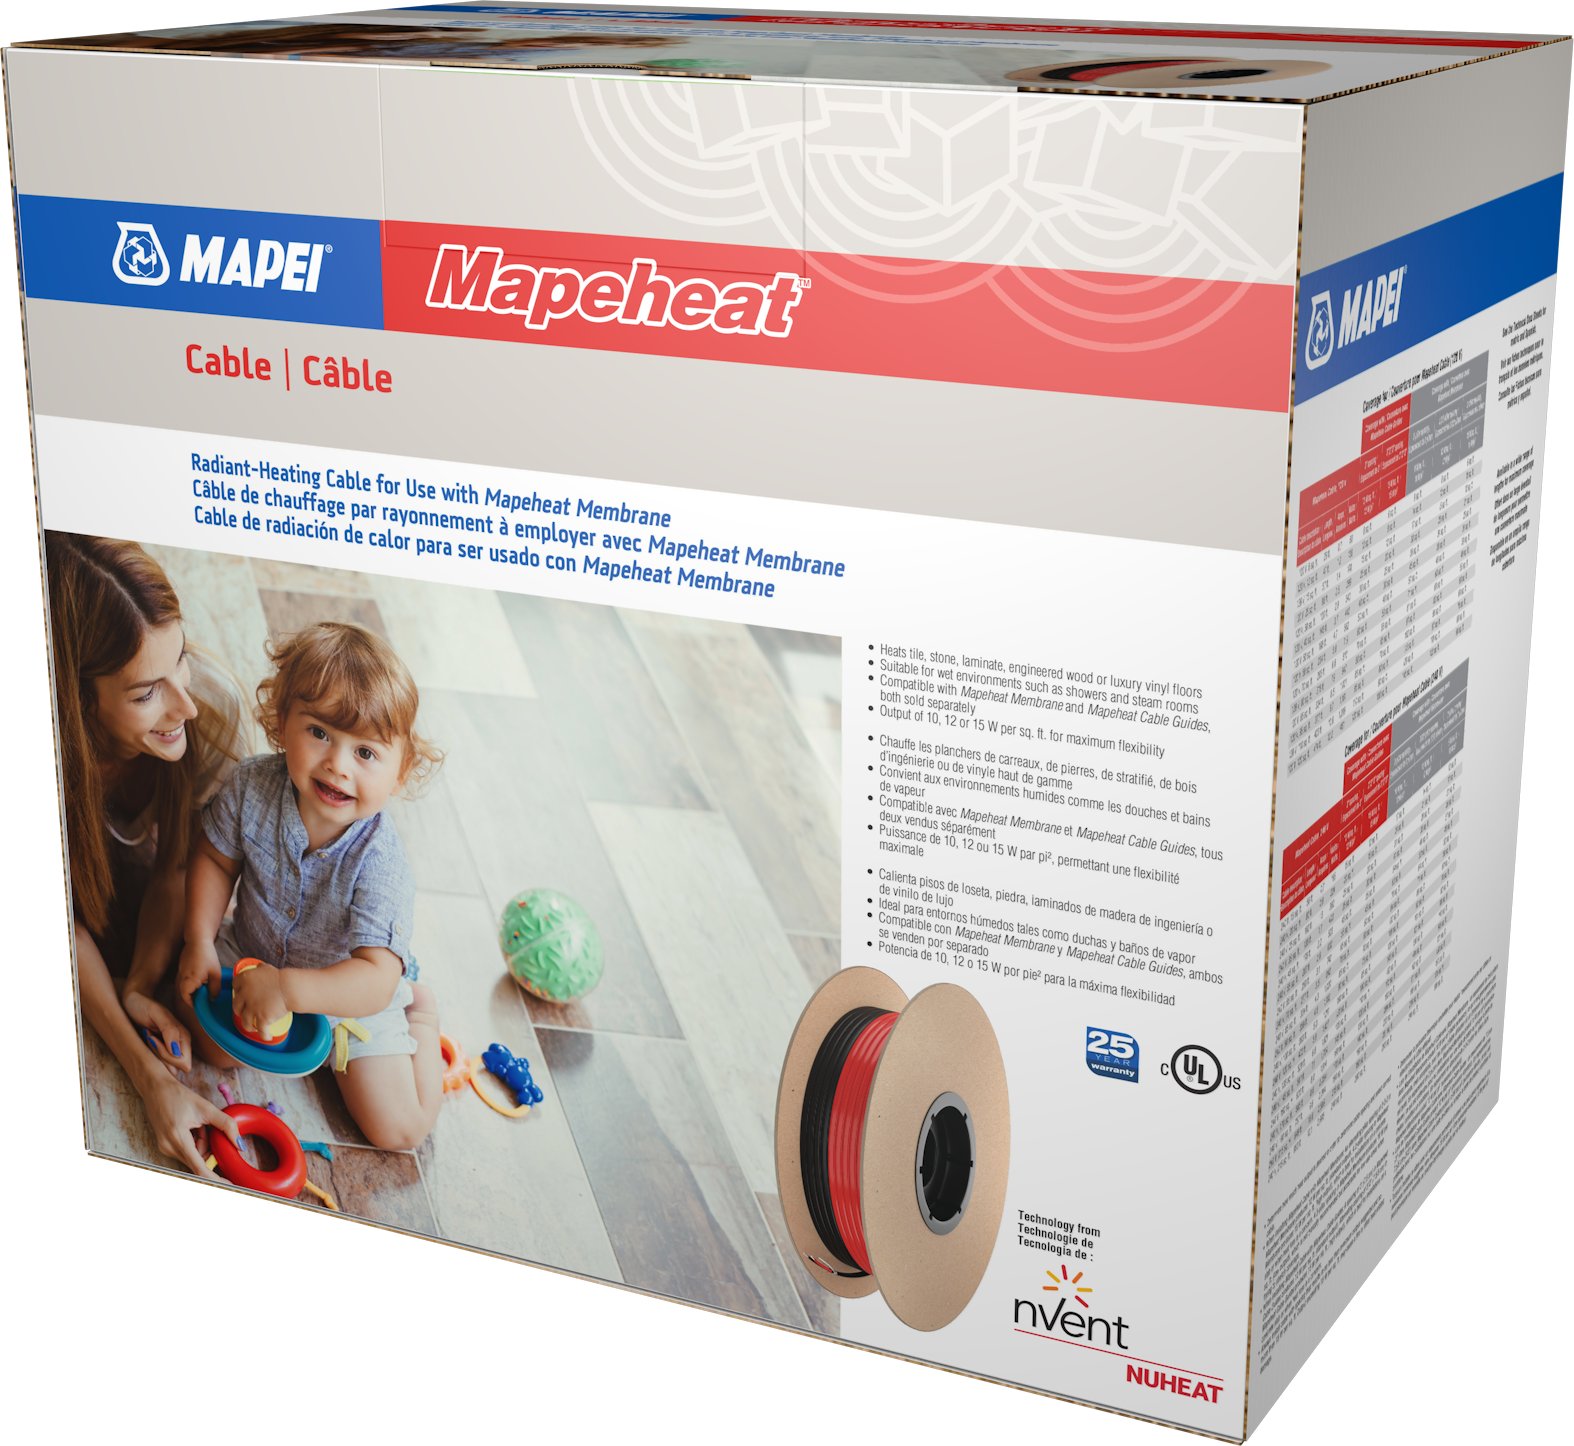 Mapei (2858301) product